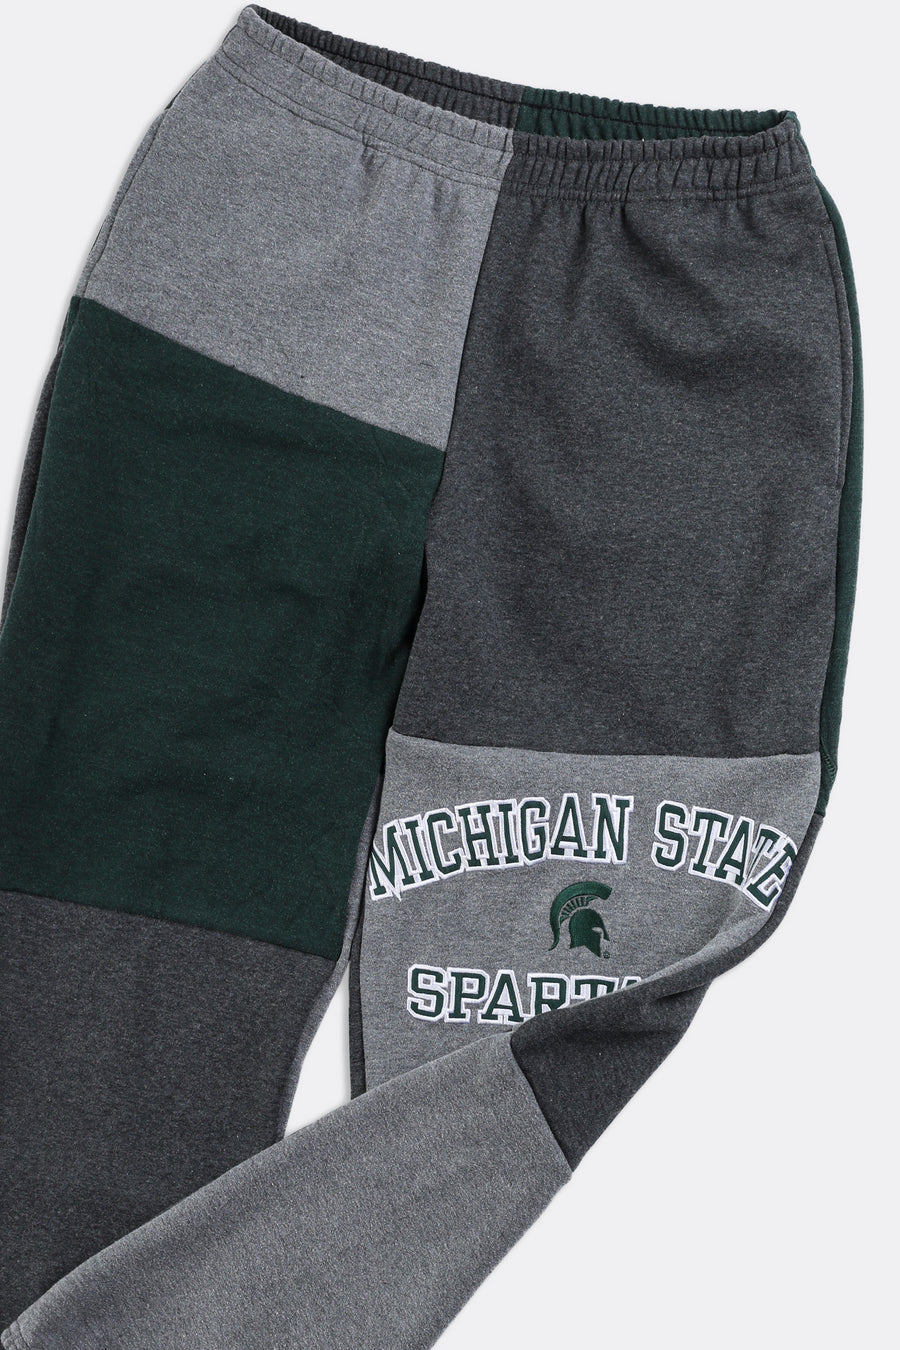 Unisex Rework Michigan State Patchwork Sweatpants - Women-M, Men-S